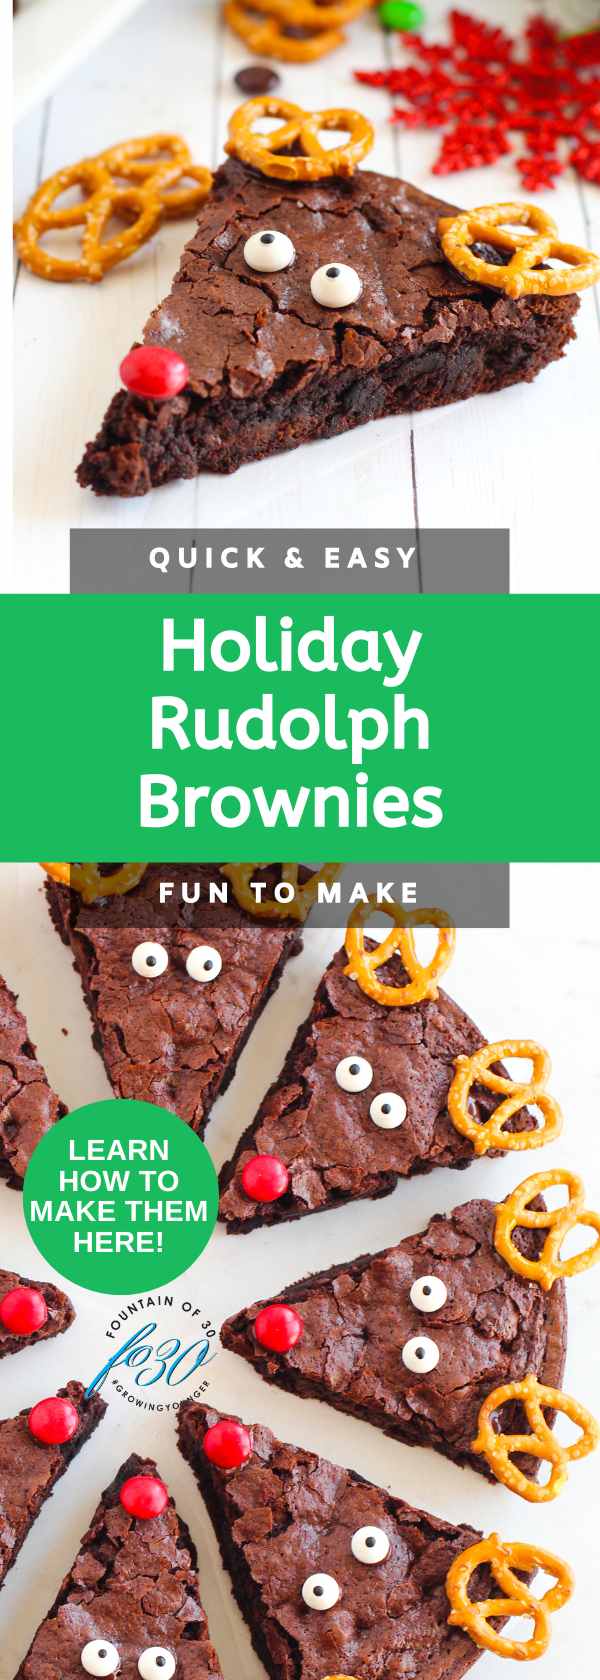 holiday rudolph brownies recipe fountainof30